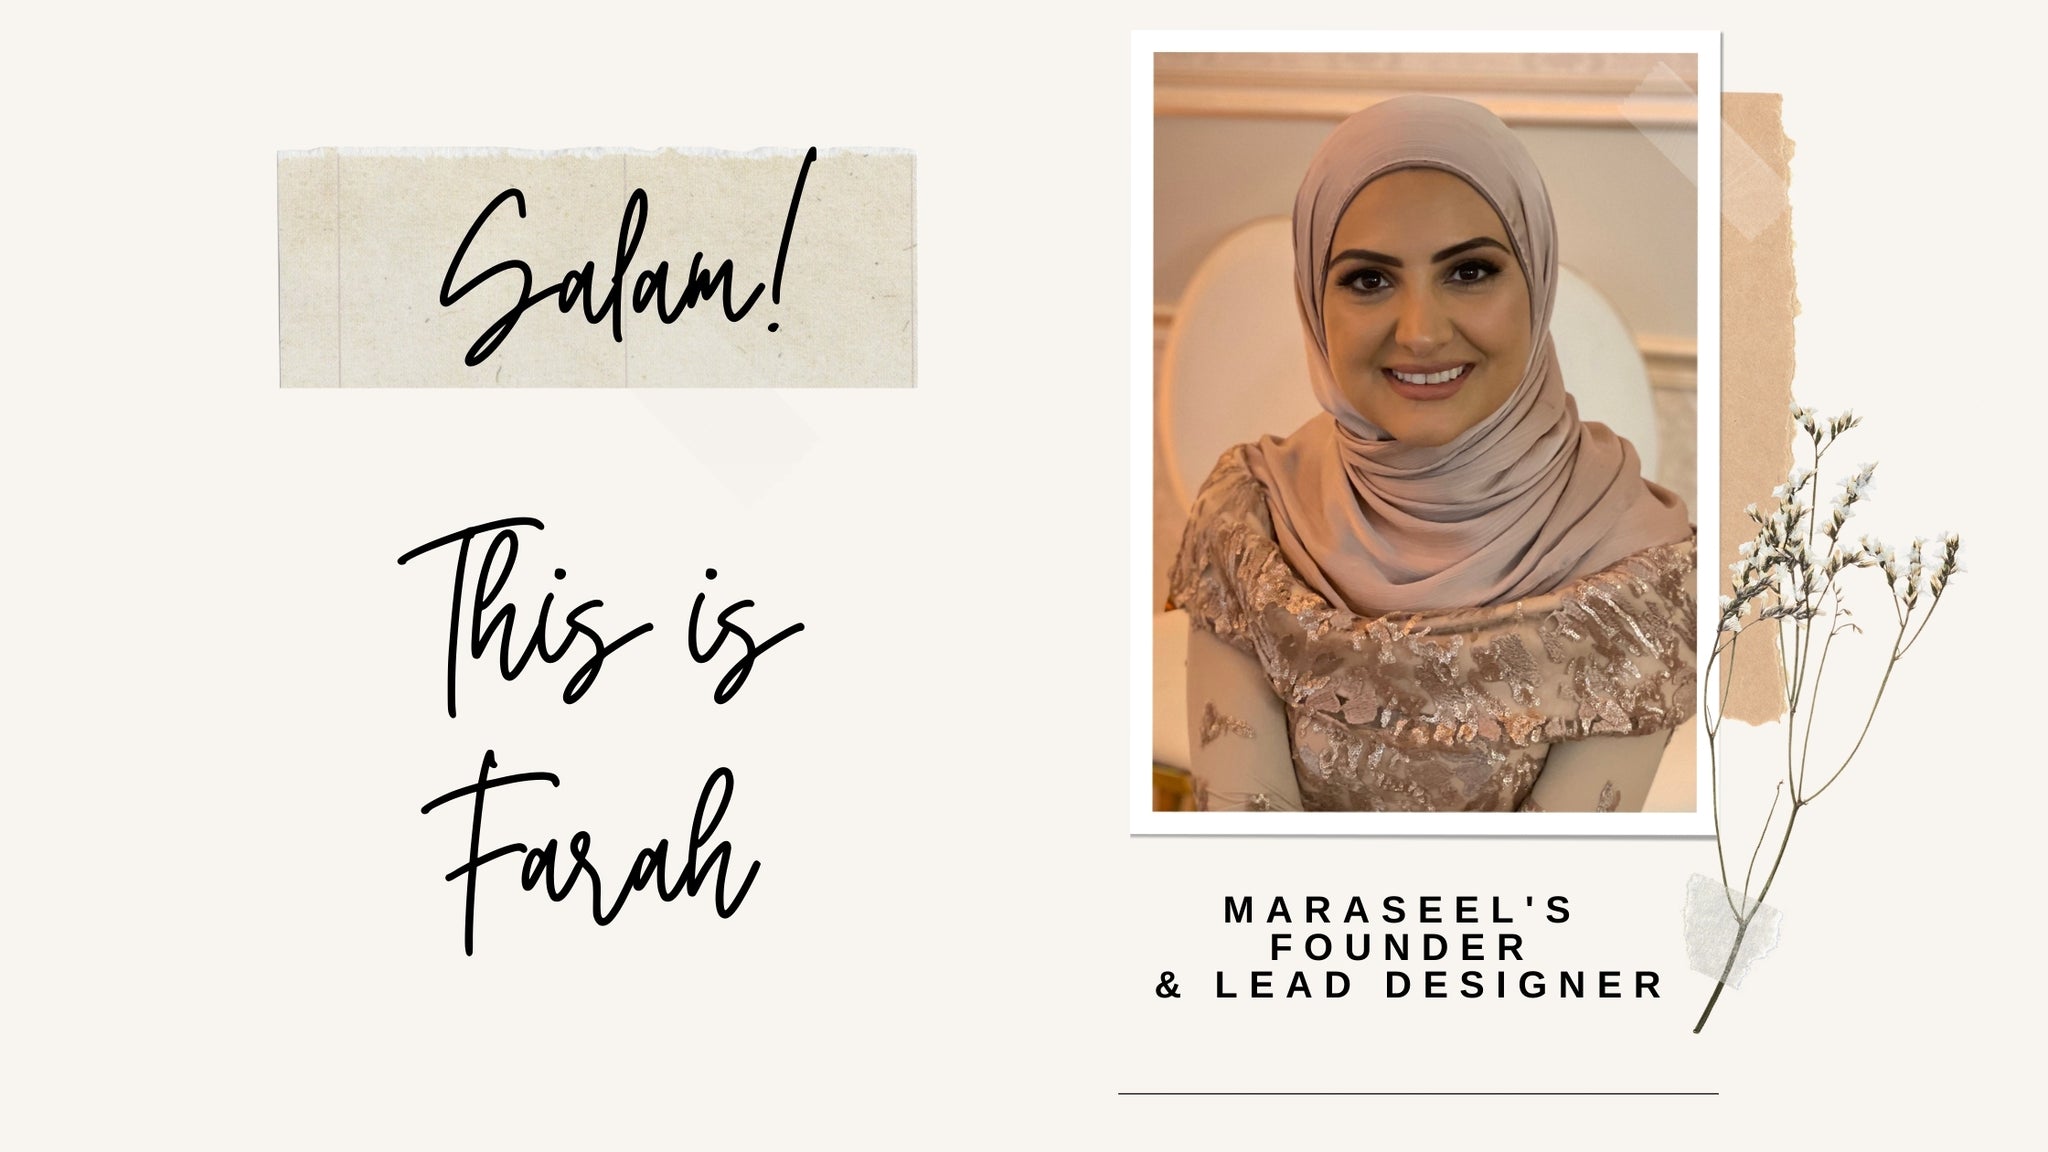 Meet Maraseel's Founder & Creative Director